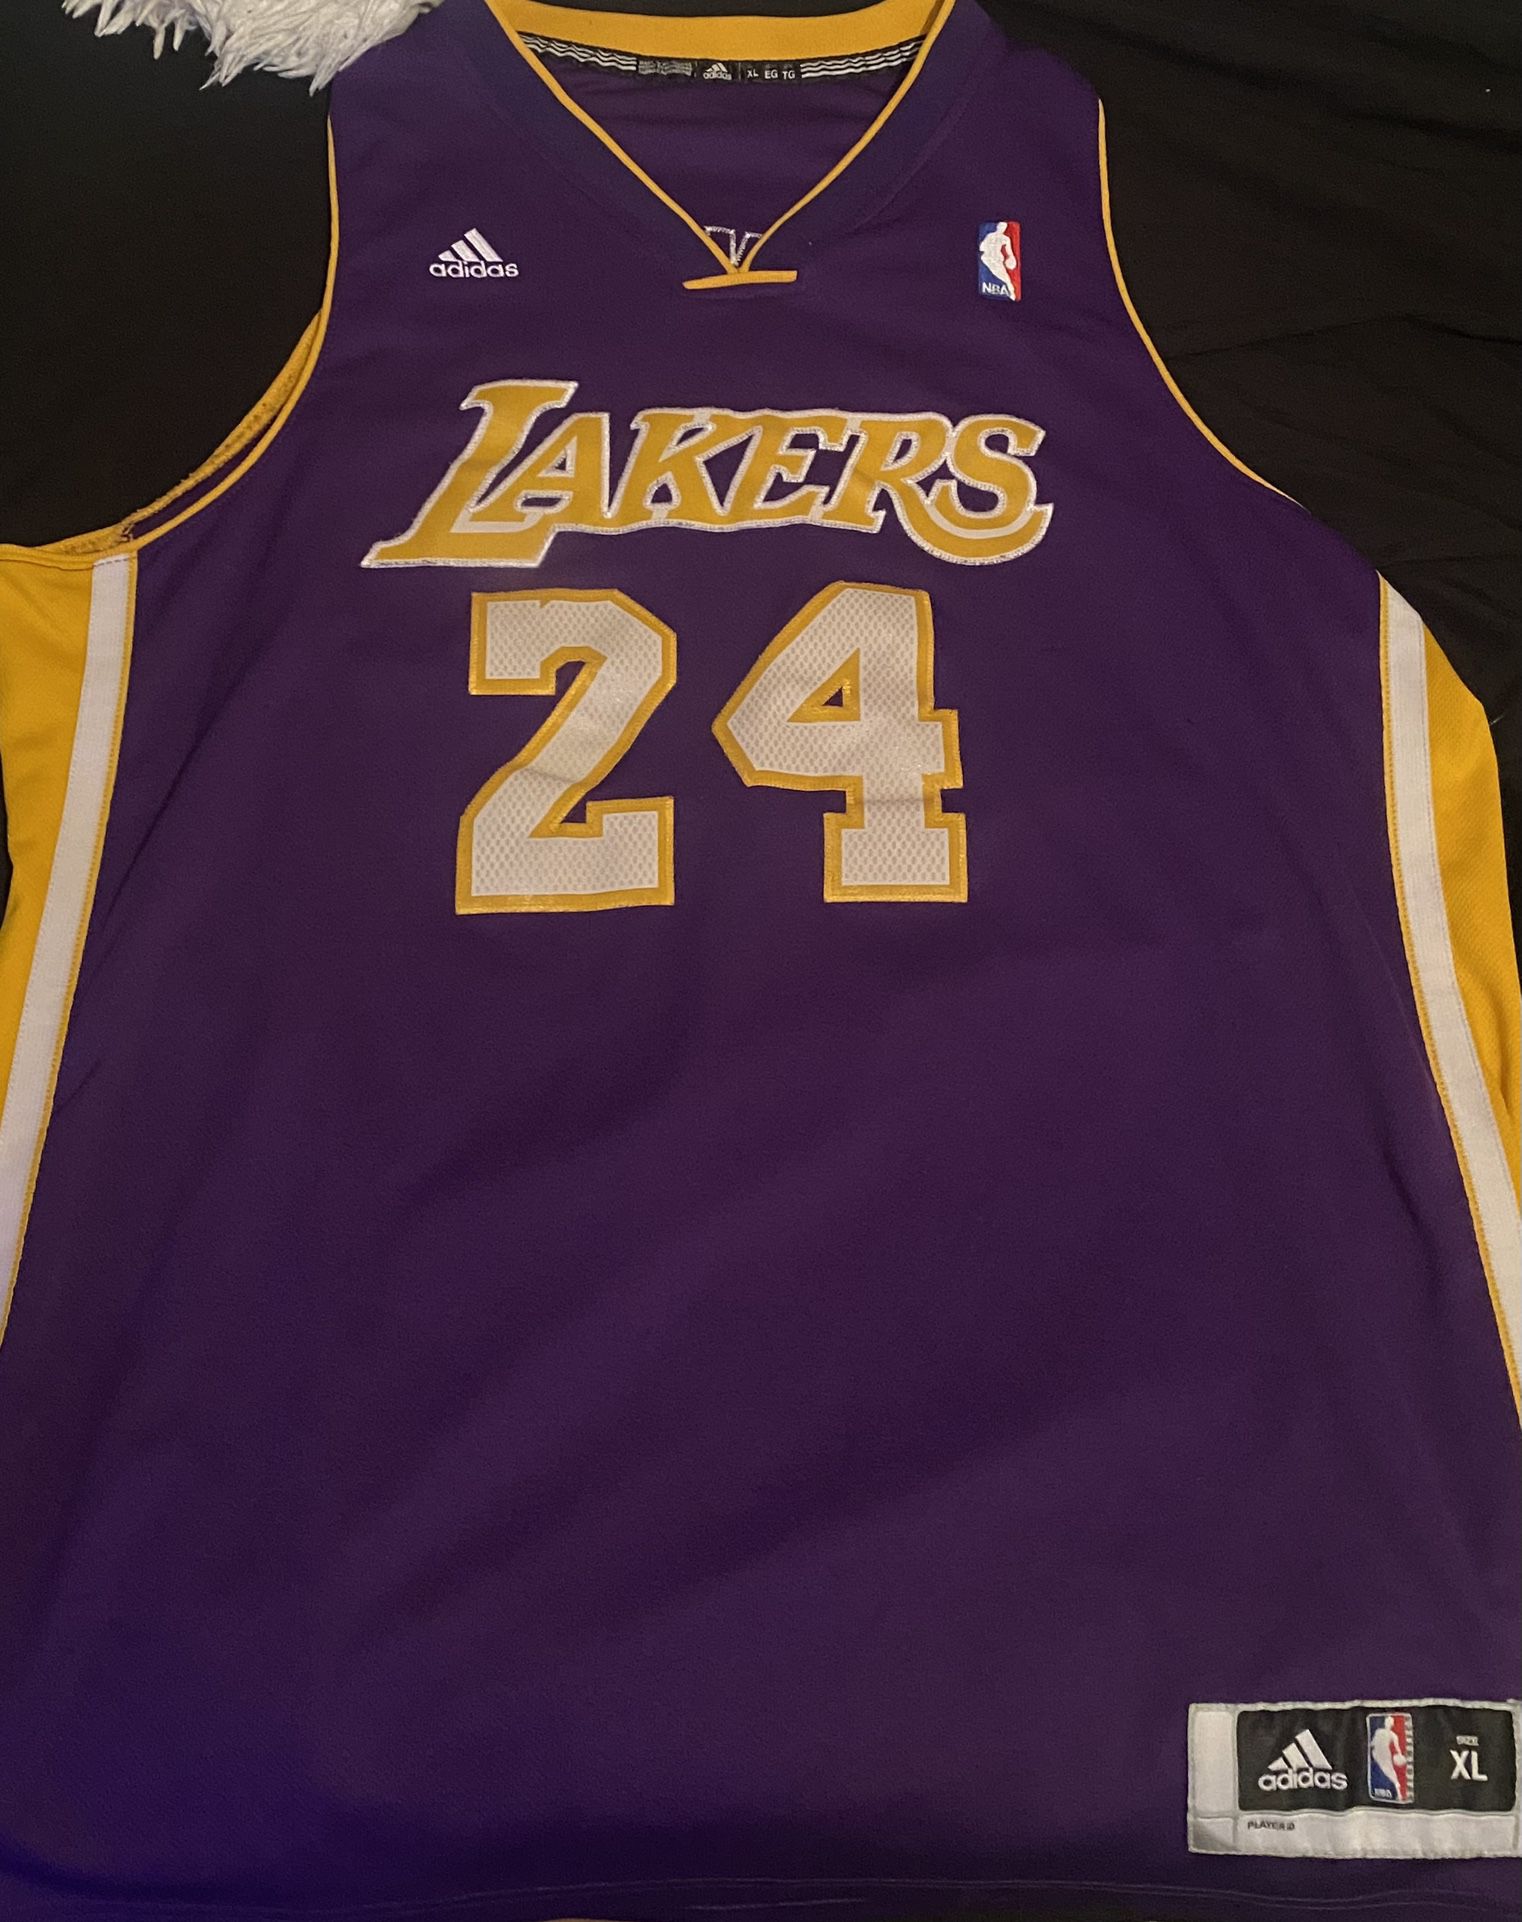 XL Authentic Kobe Bryant Jersey